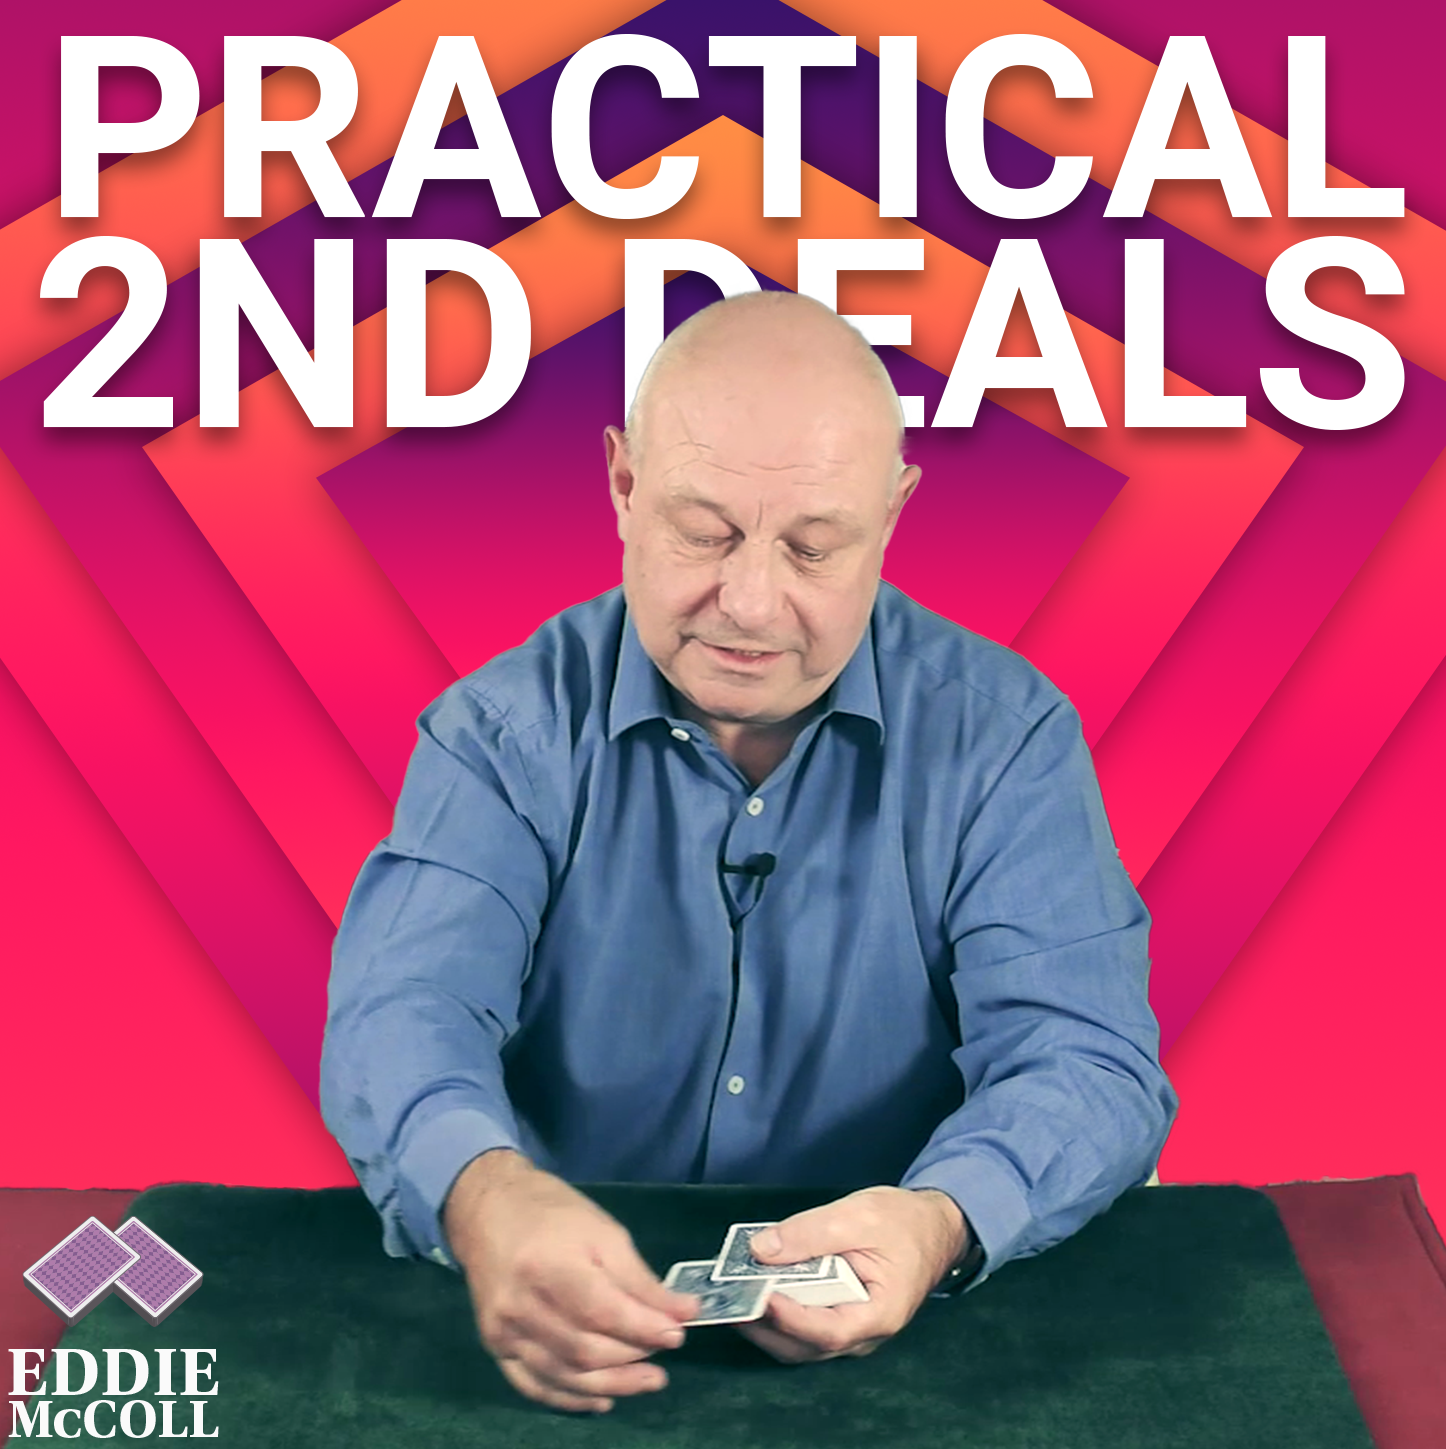 Eddie McColl – Practical Second Deals